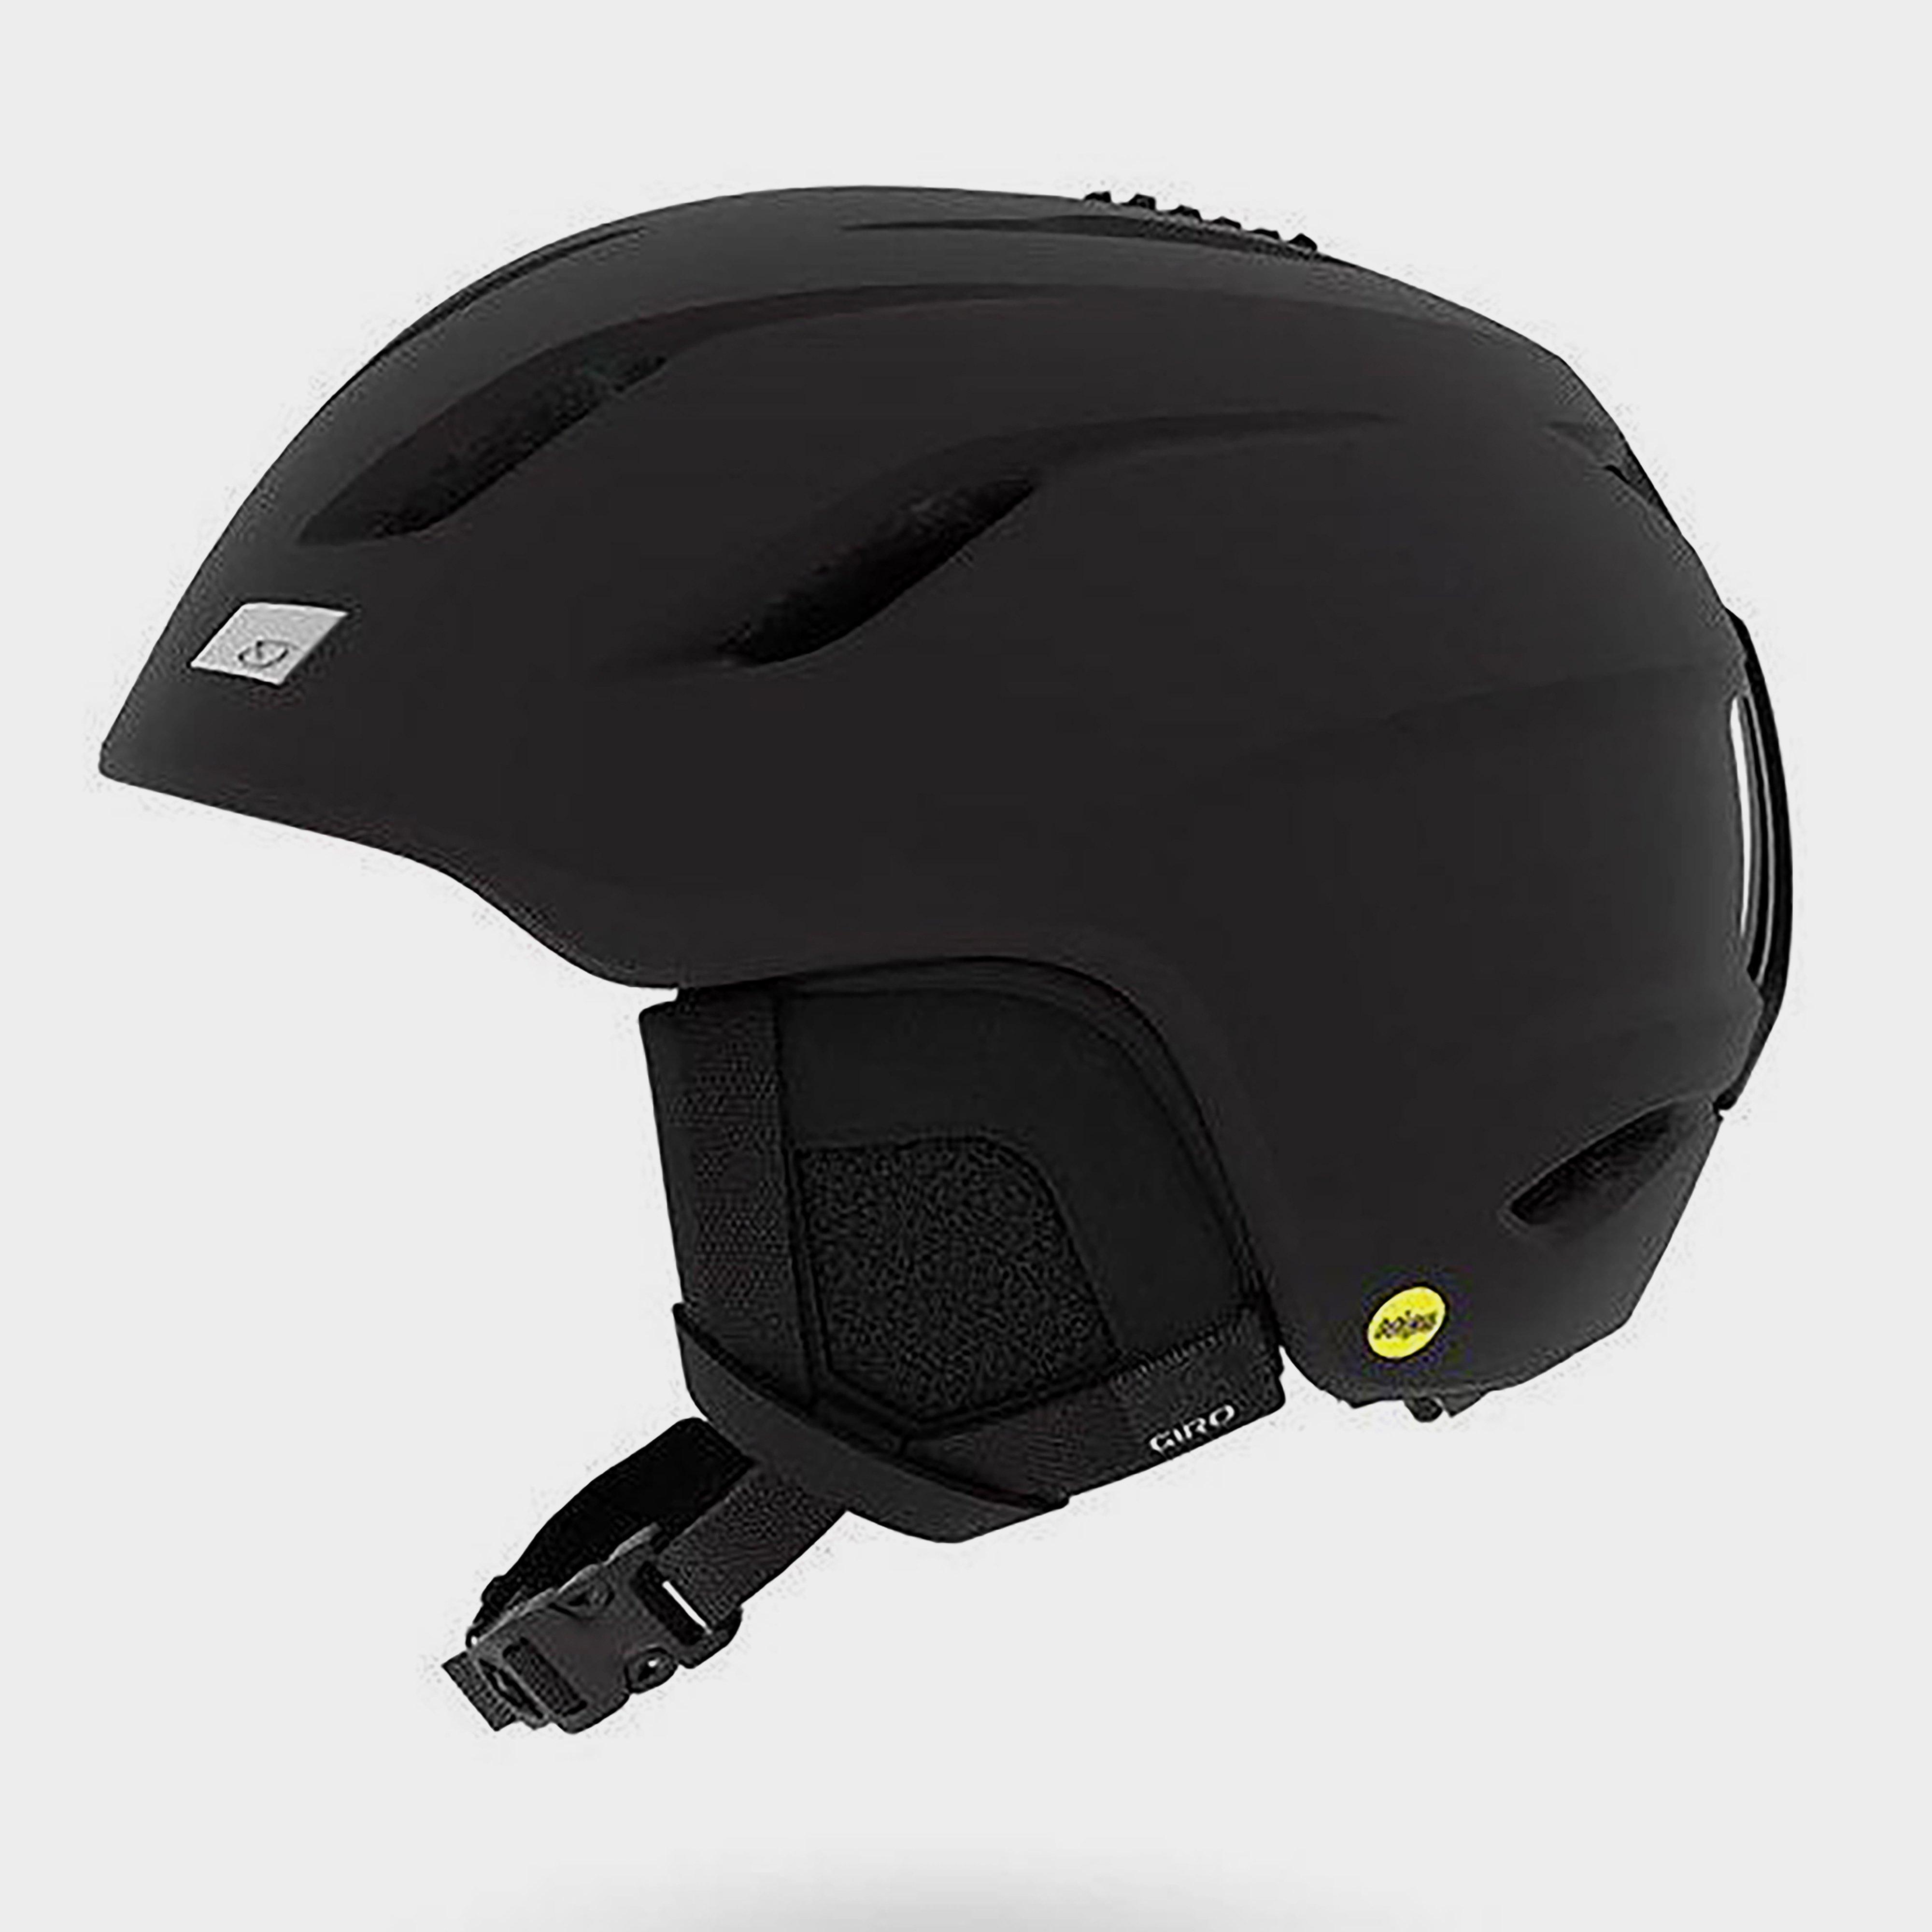 GIRO Nine MIPS Snow Helmet Review